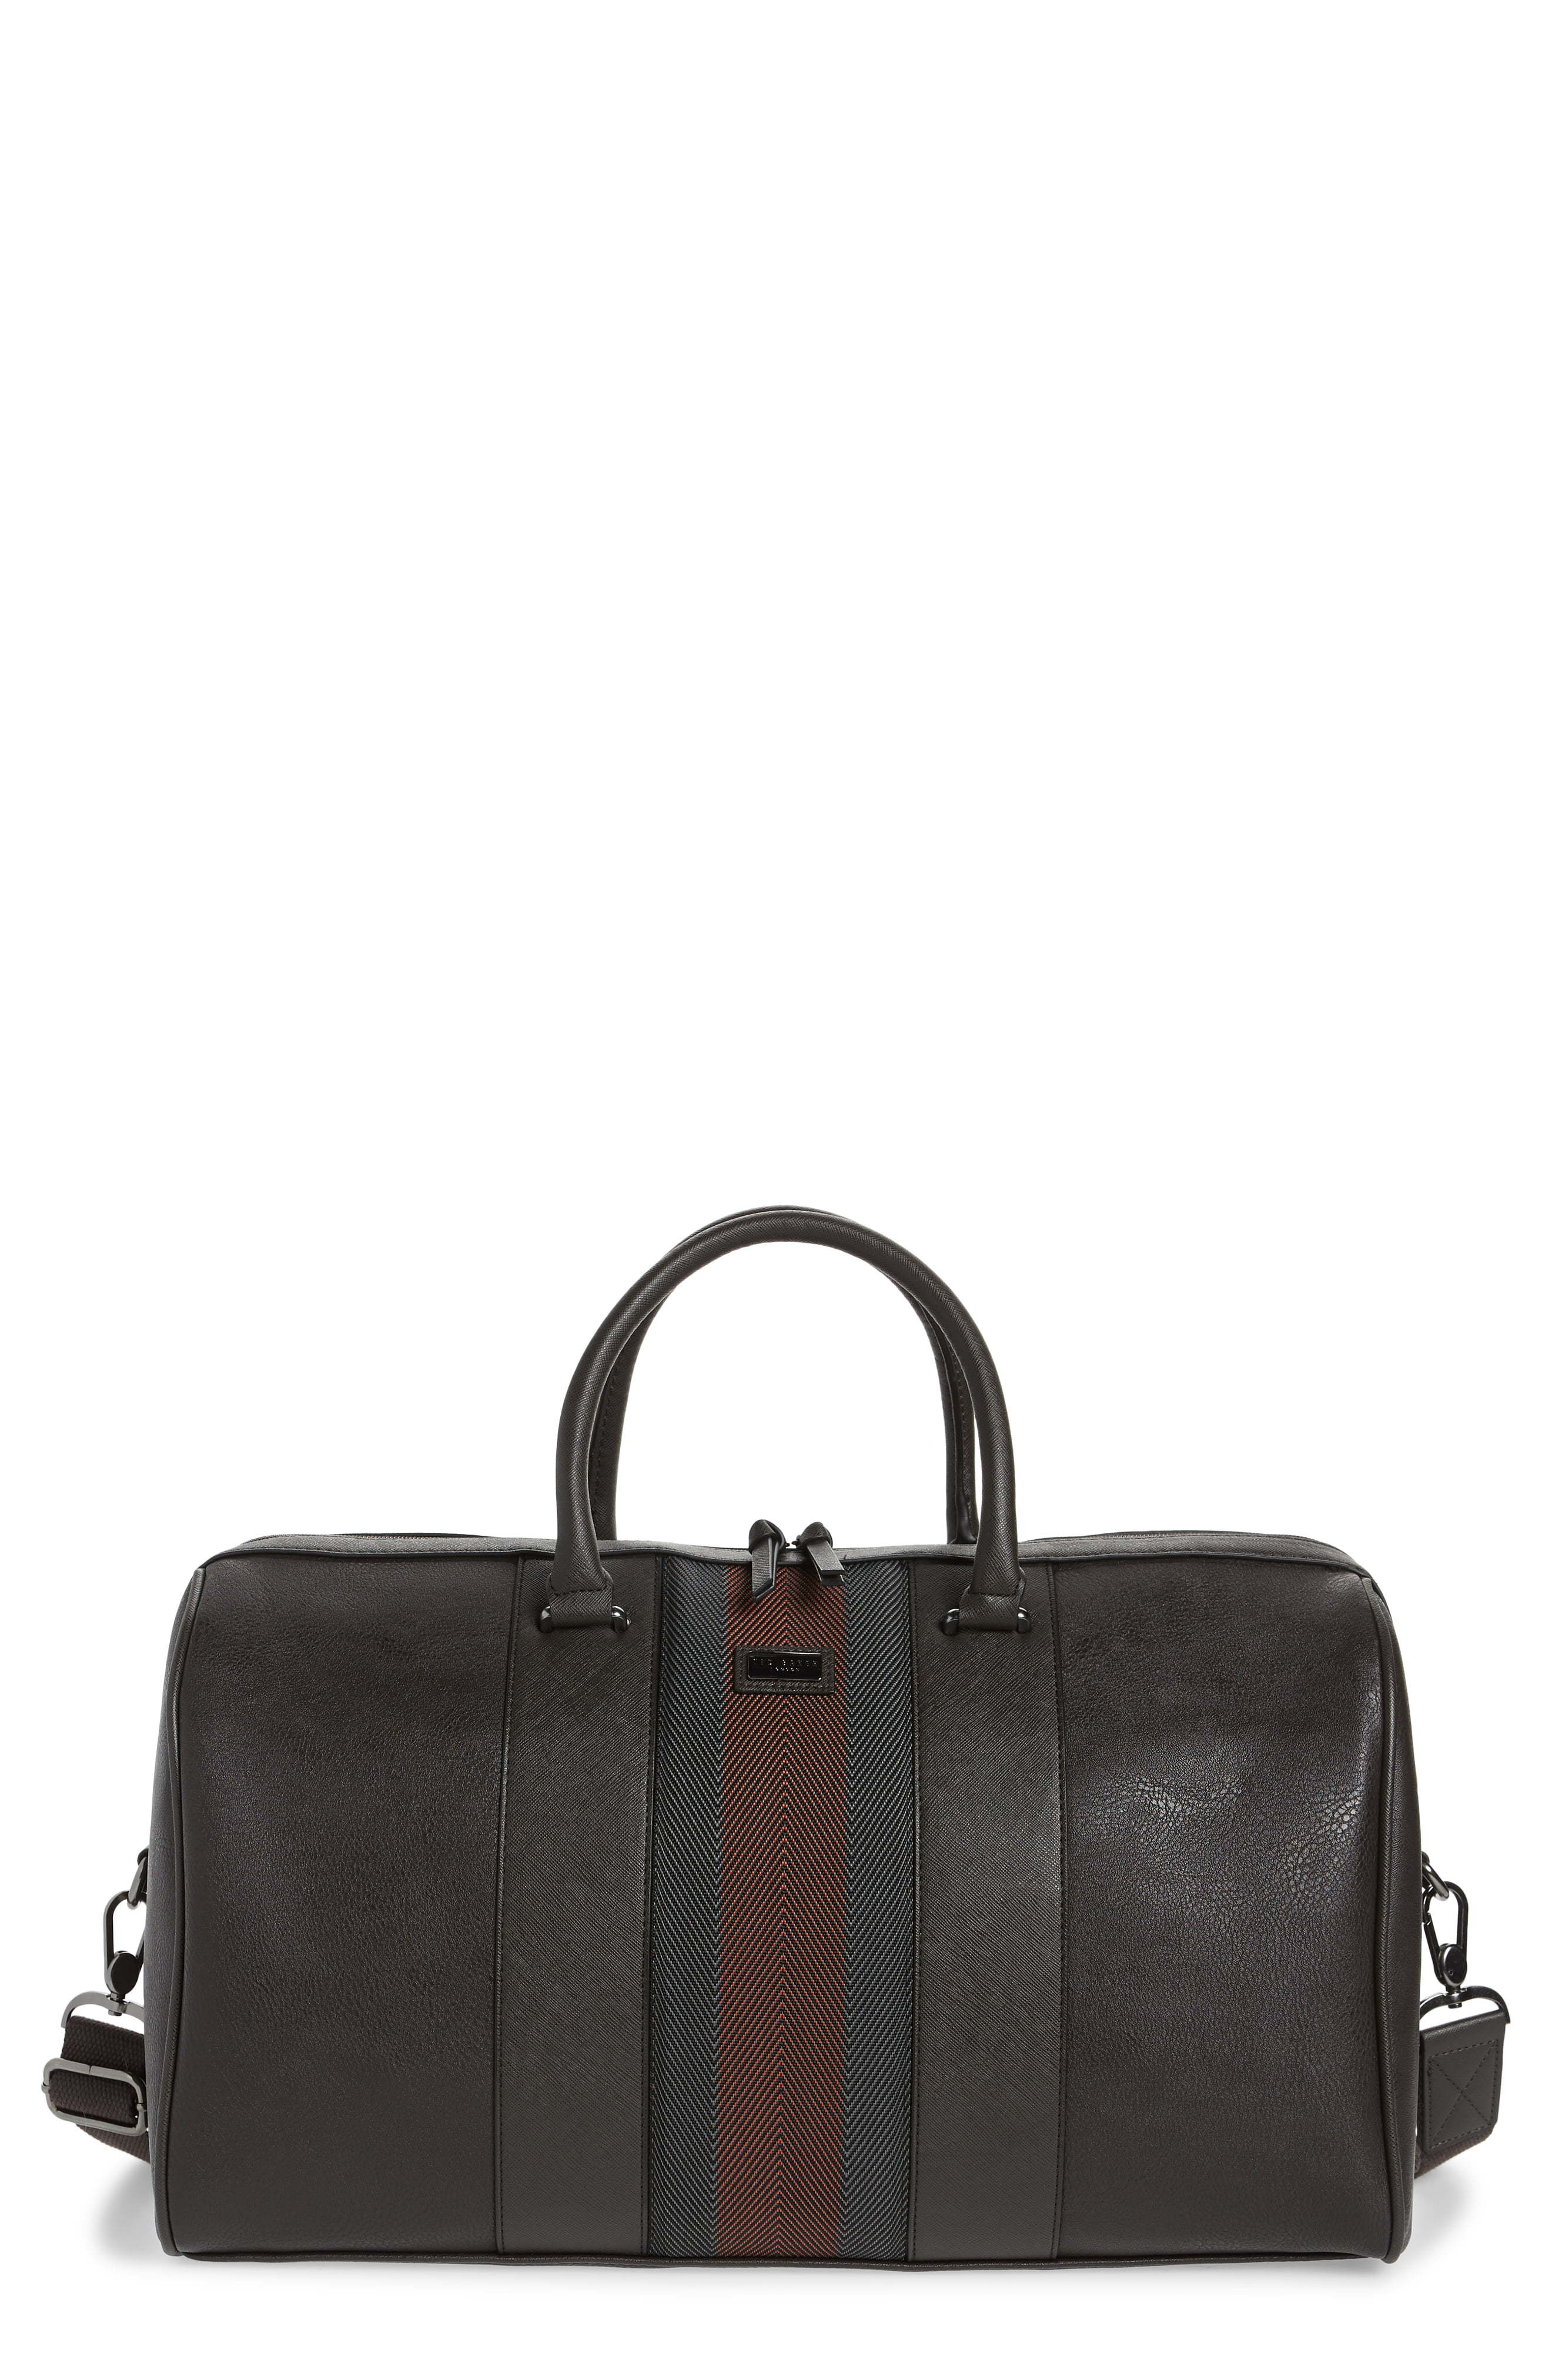 Ted Baker London Beaner Faux Leather Duffle Bag, $159 | Nordstrom ...